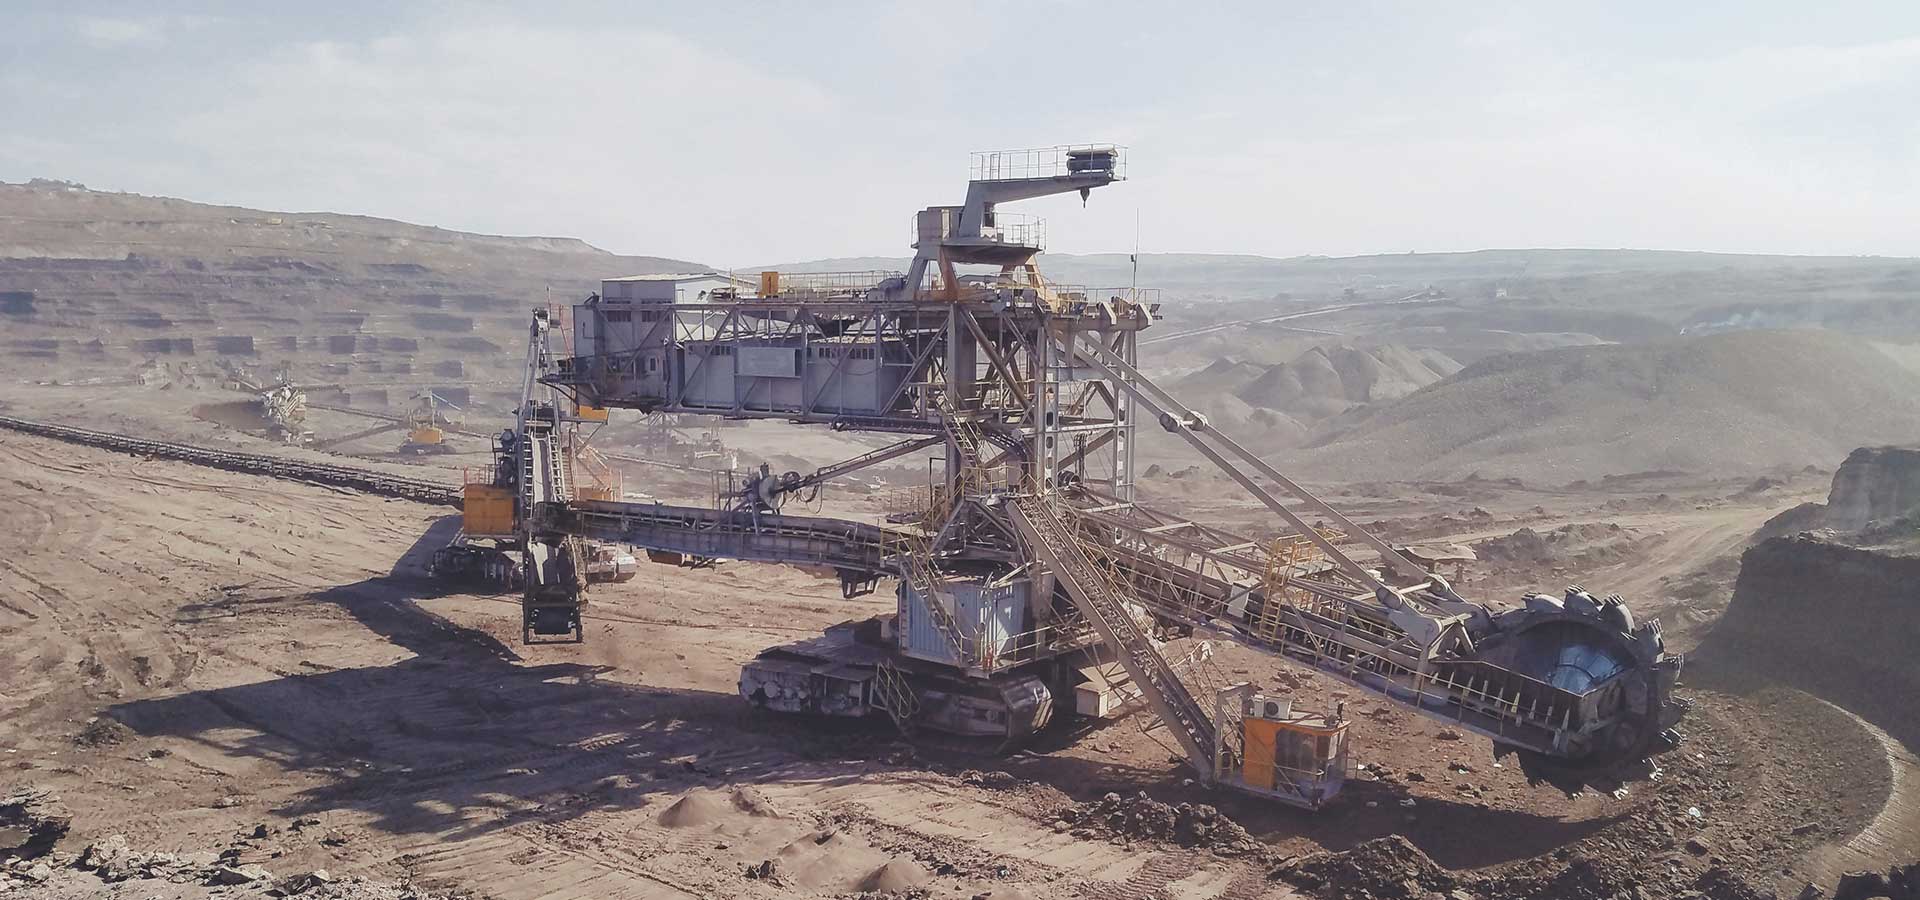 quarry with large excavator 